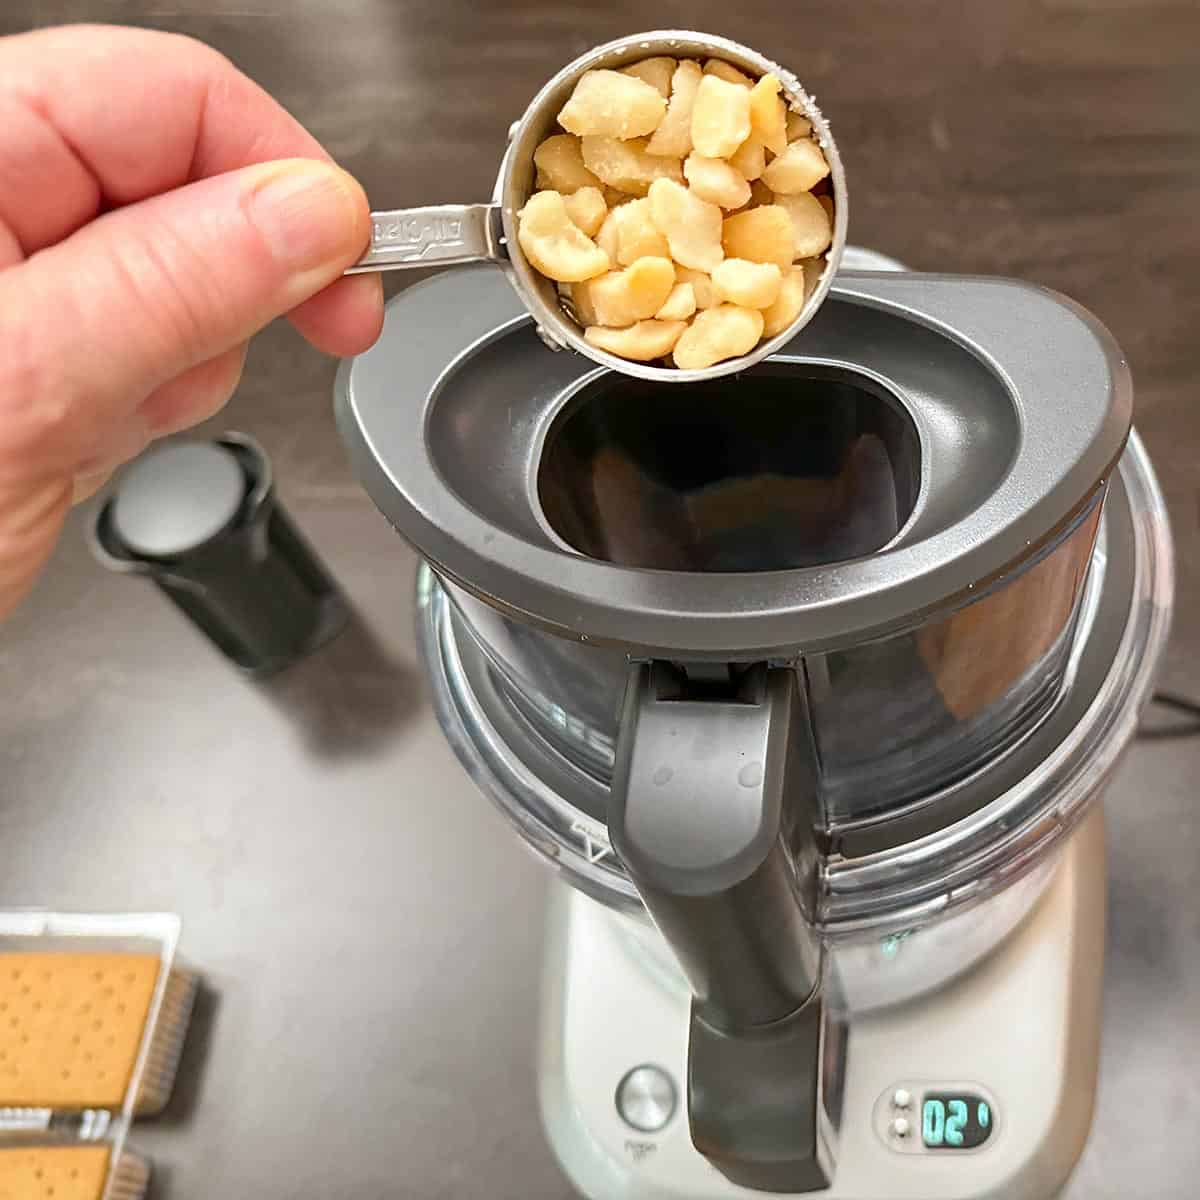 Adding the macadamia nuts to the food processor.